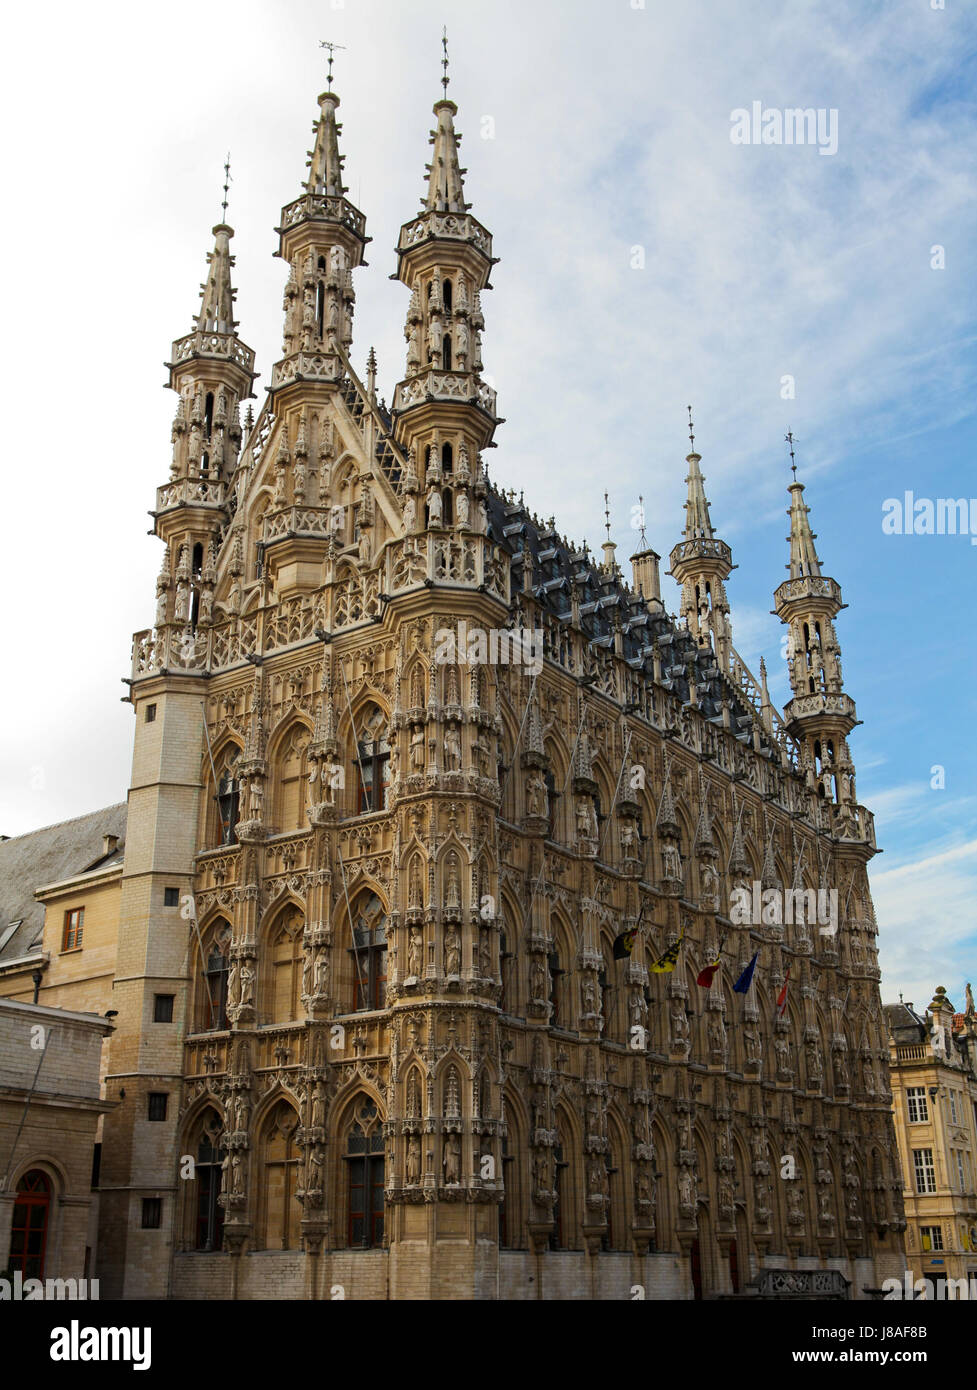 hall, city, town, belgium, brabant, flemish, hall, city, town, famous, belgium, Stock Photo